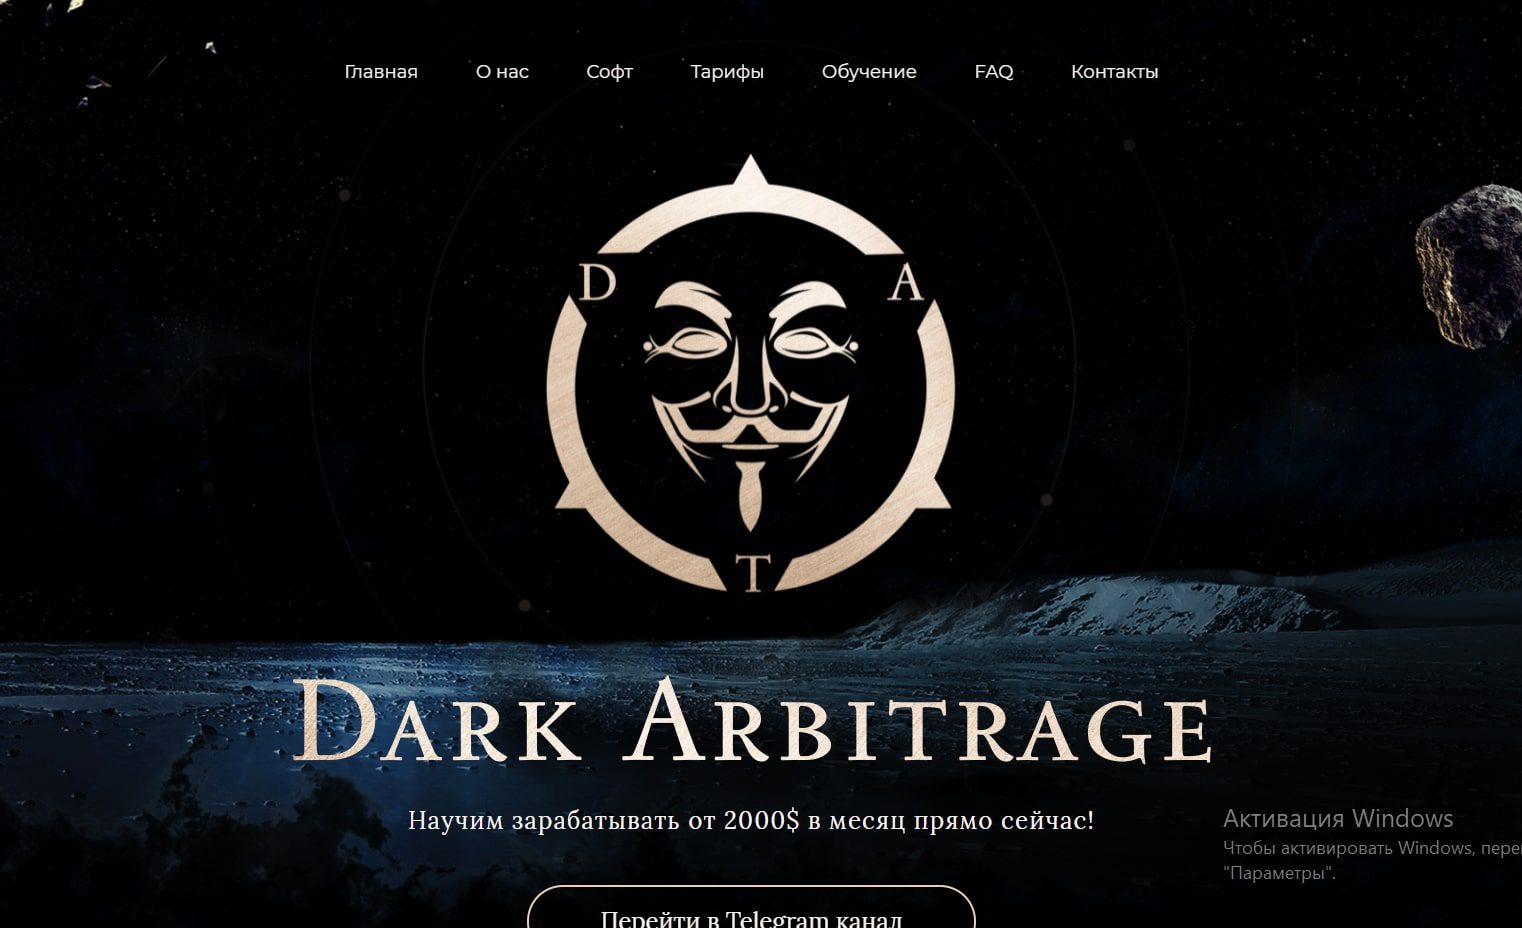 Dark Arbitrage - сайт